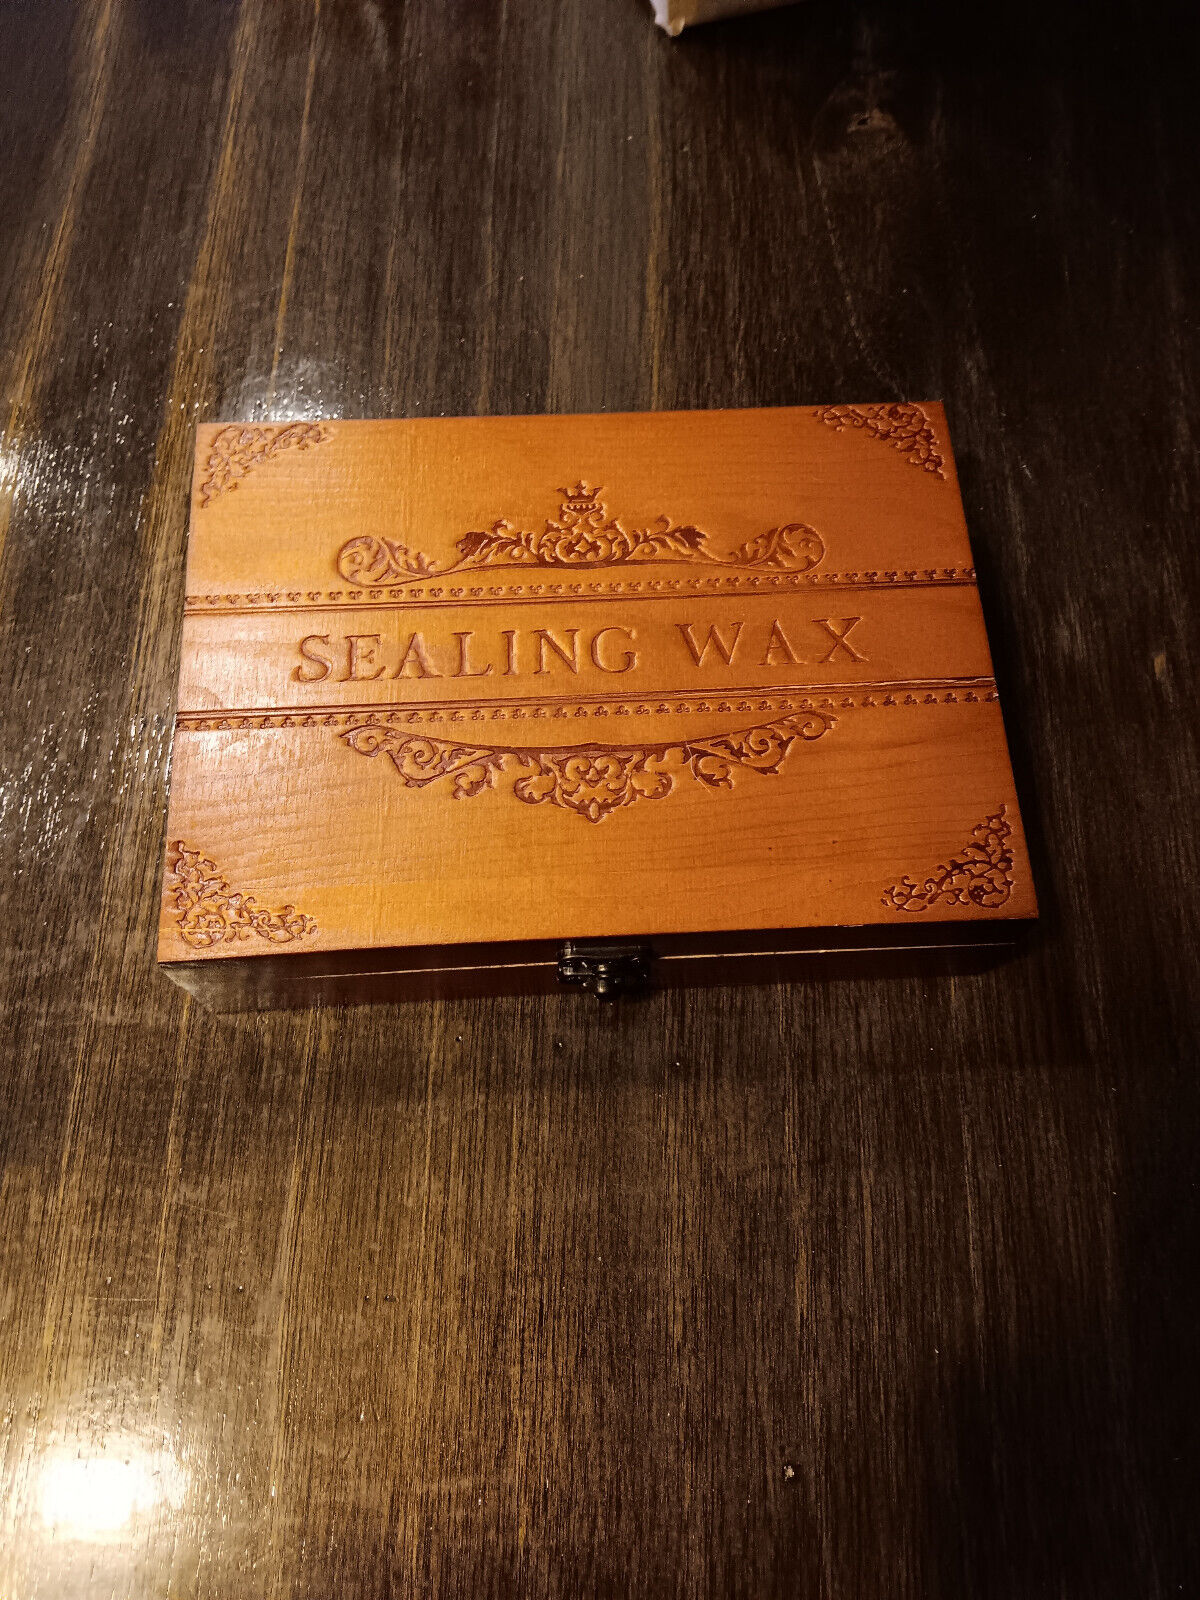 Sealing Wax Kit in Nice Wooden Box